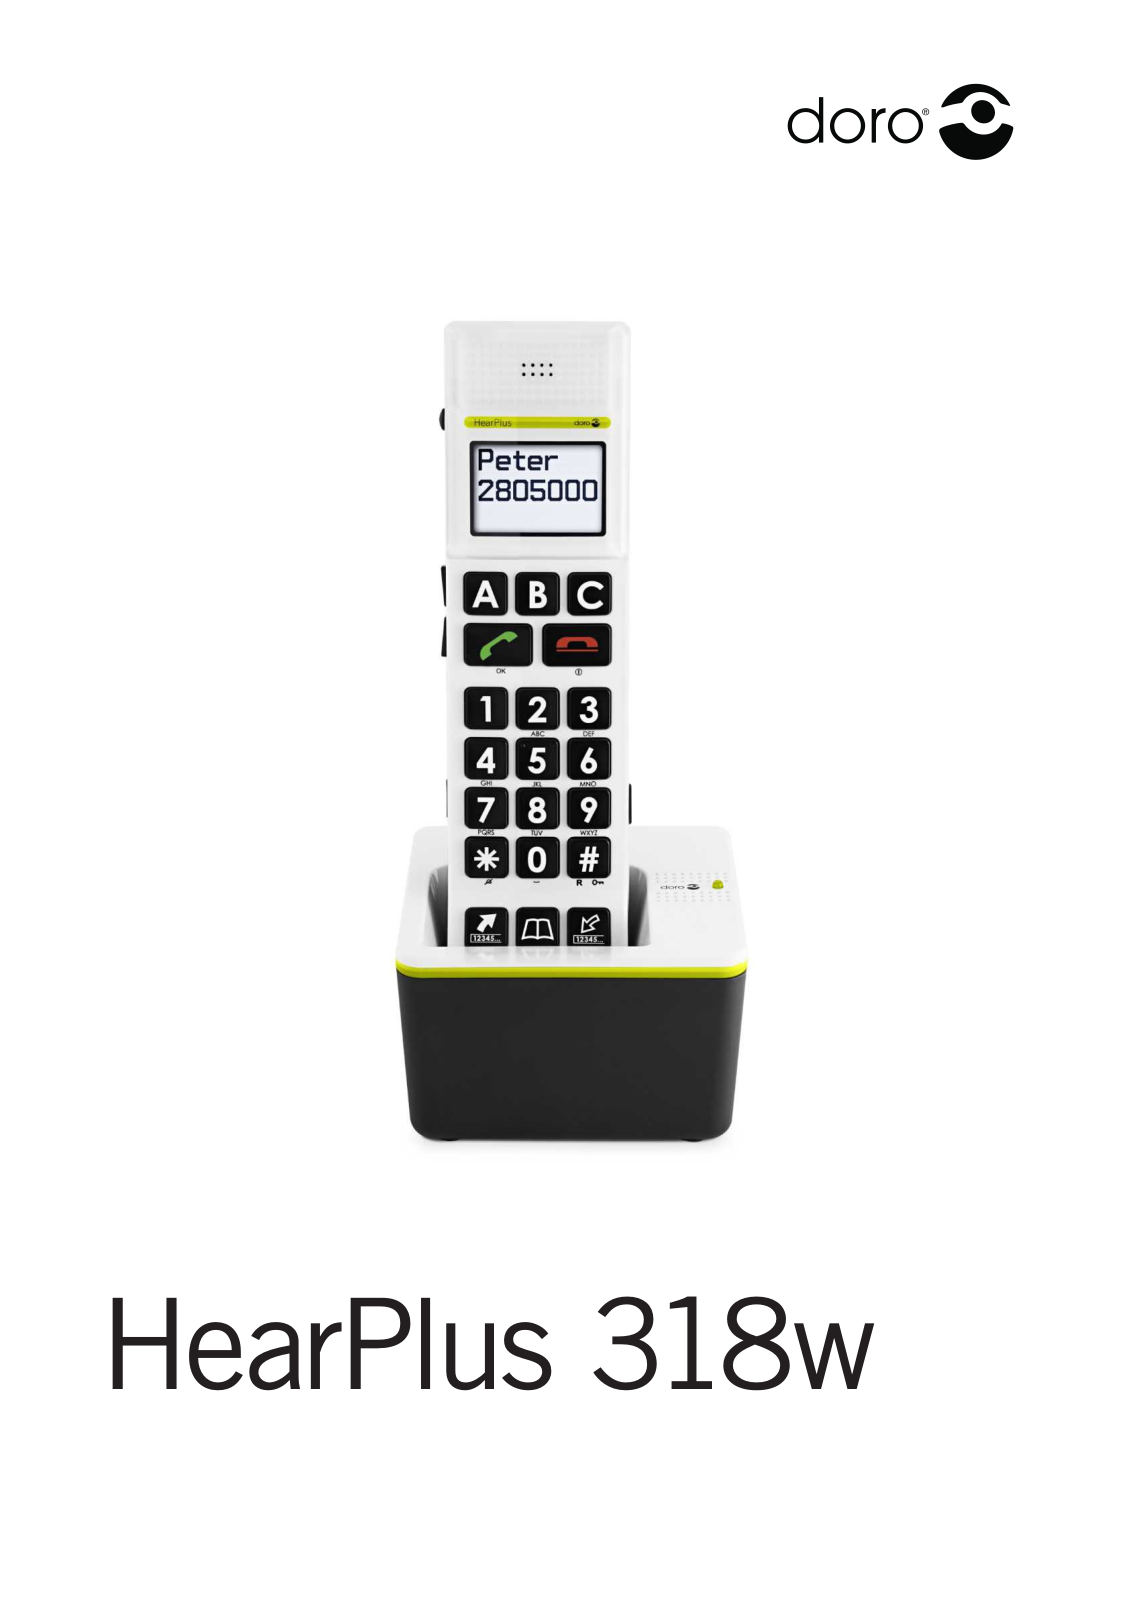 Doro HearPlus 318w User Manual